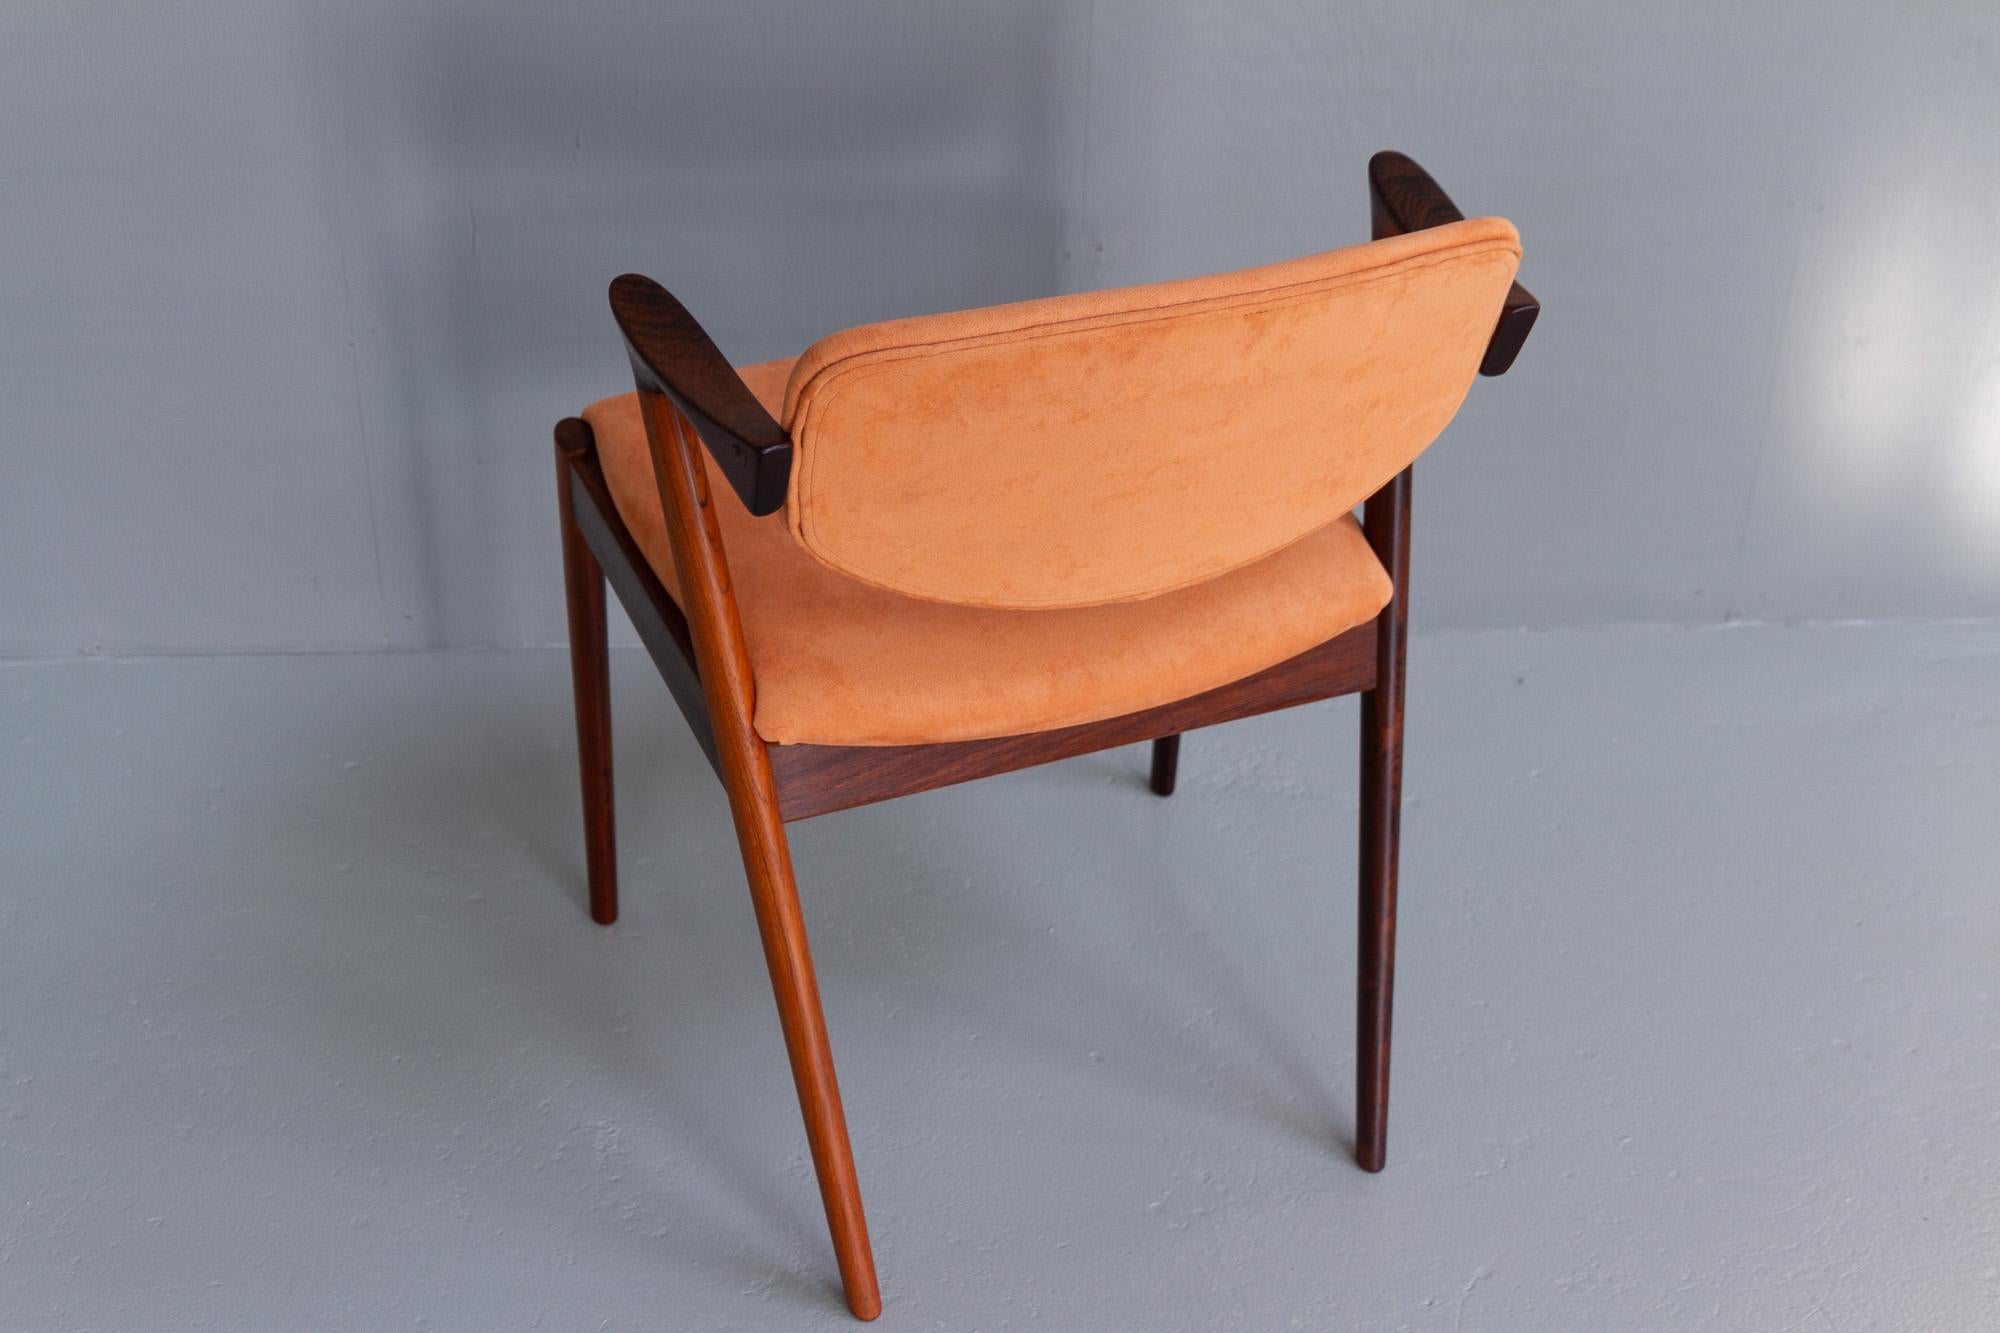 Vintage Danish Modern Rosewood Chair Model 42 by Kai Kristiansen, 1960s For Sale 1